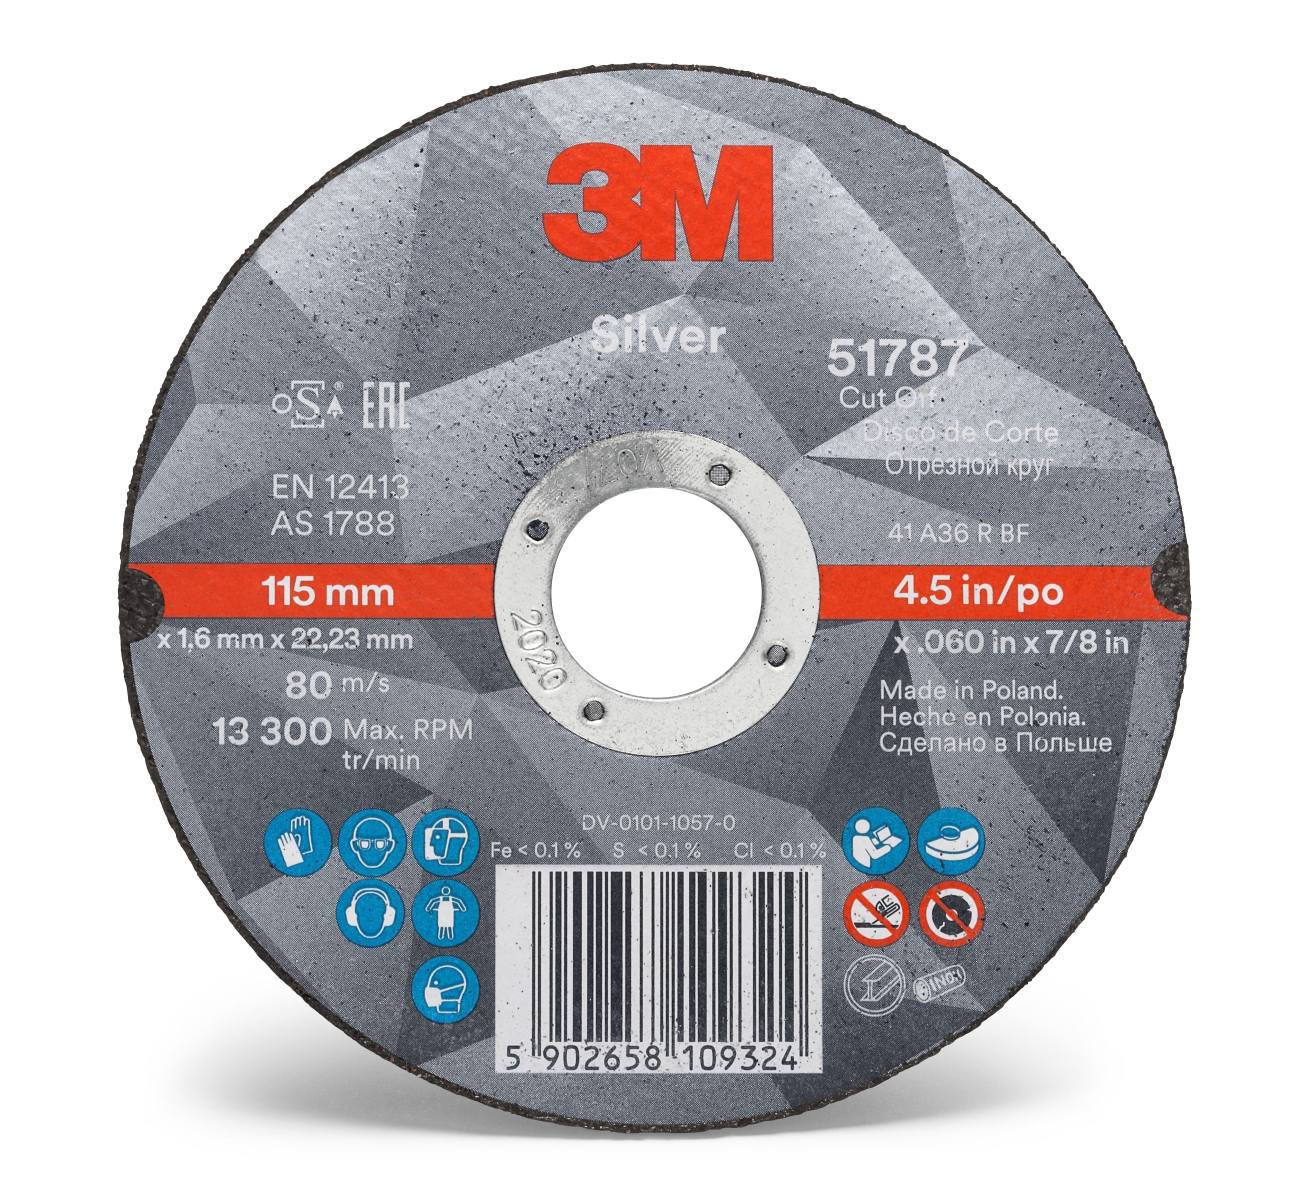 Disco da taglio 3M Silver Cut-Off, 180 mm, 2,5 mm, 22,23 mm, T42, 51802